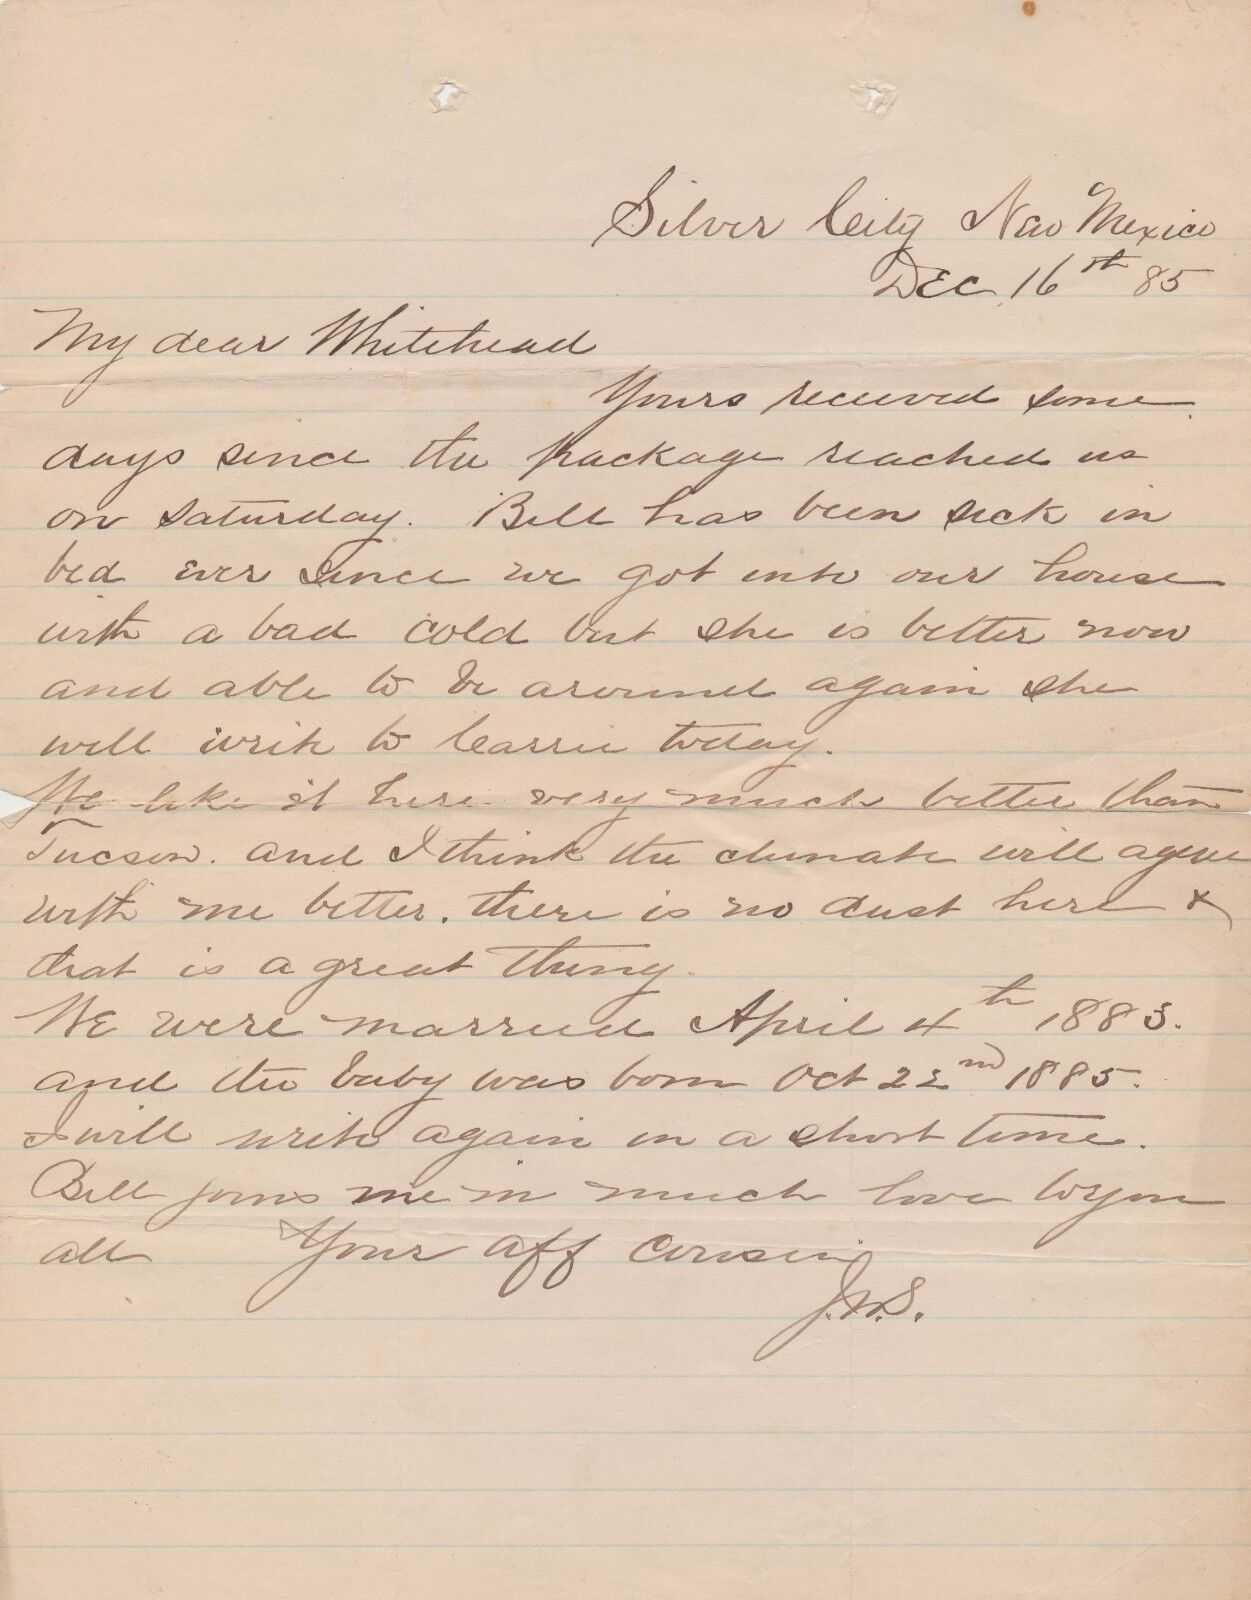 Silver City, New Mexico letter 1885 re shotgun wedding & birth of child